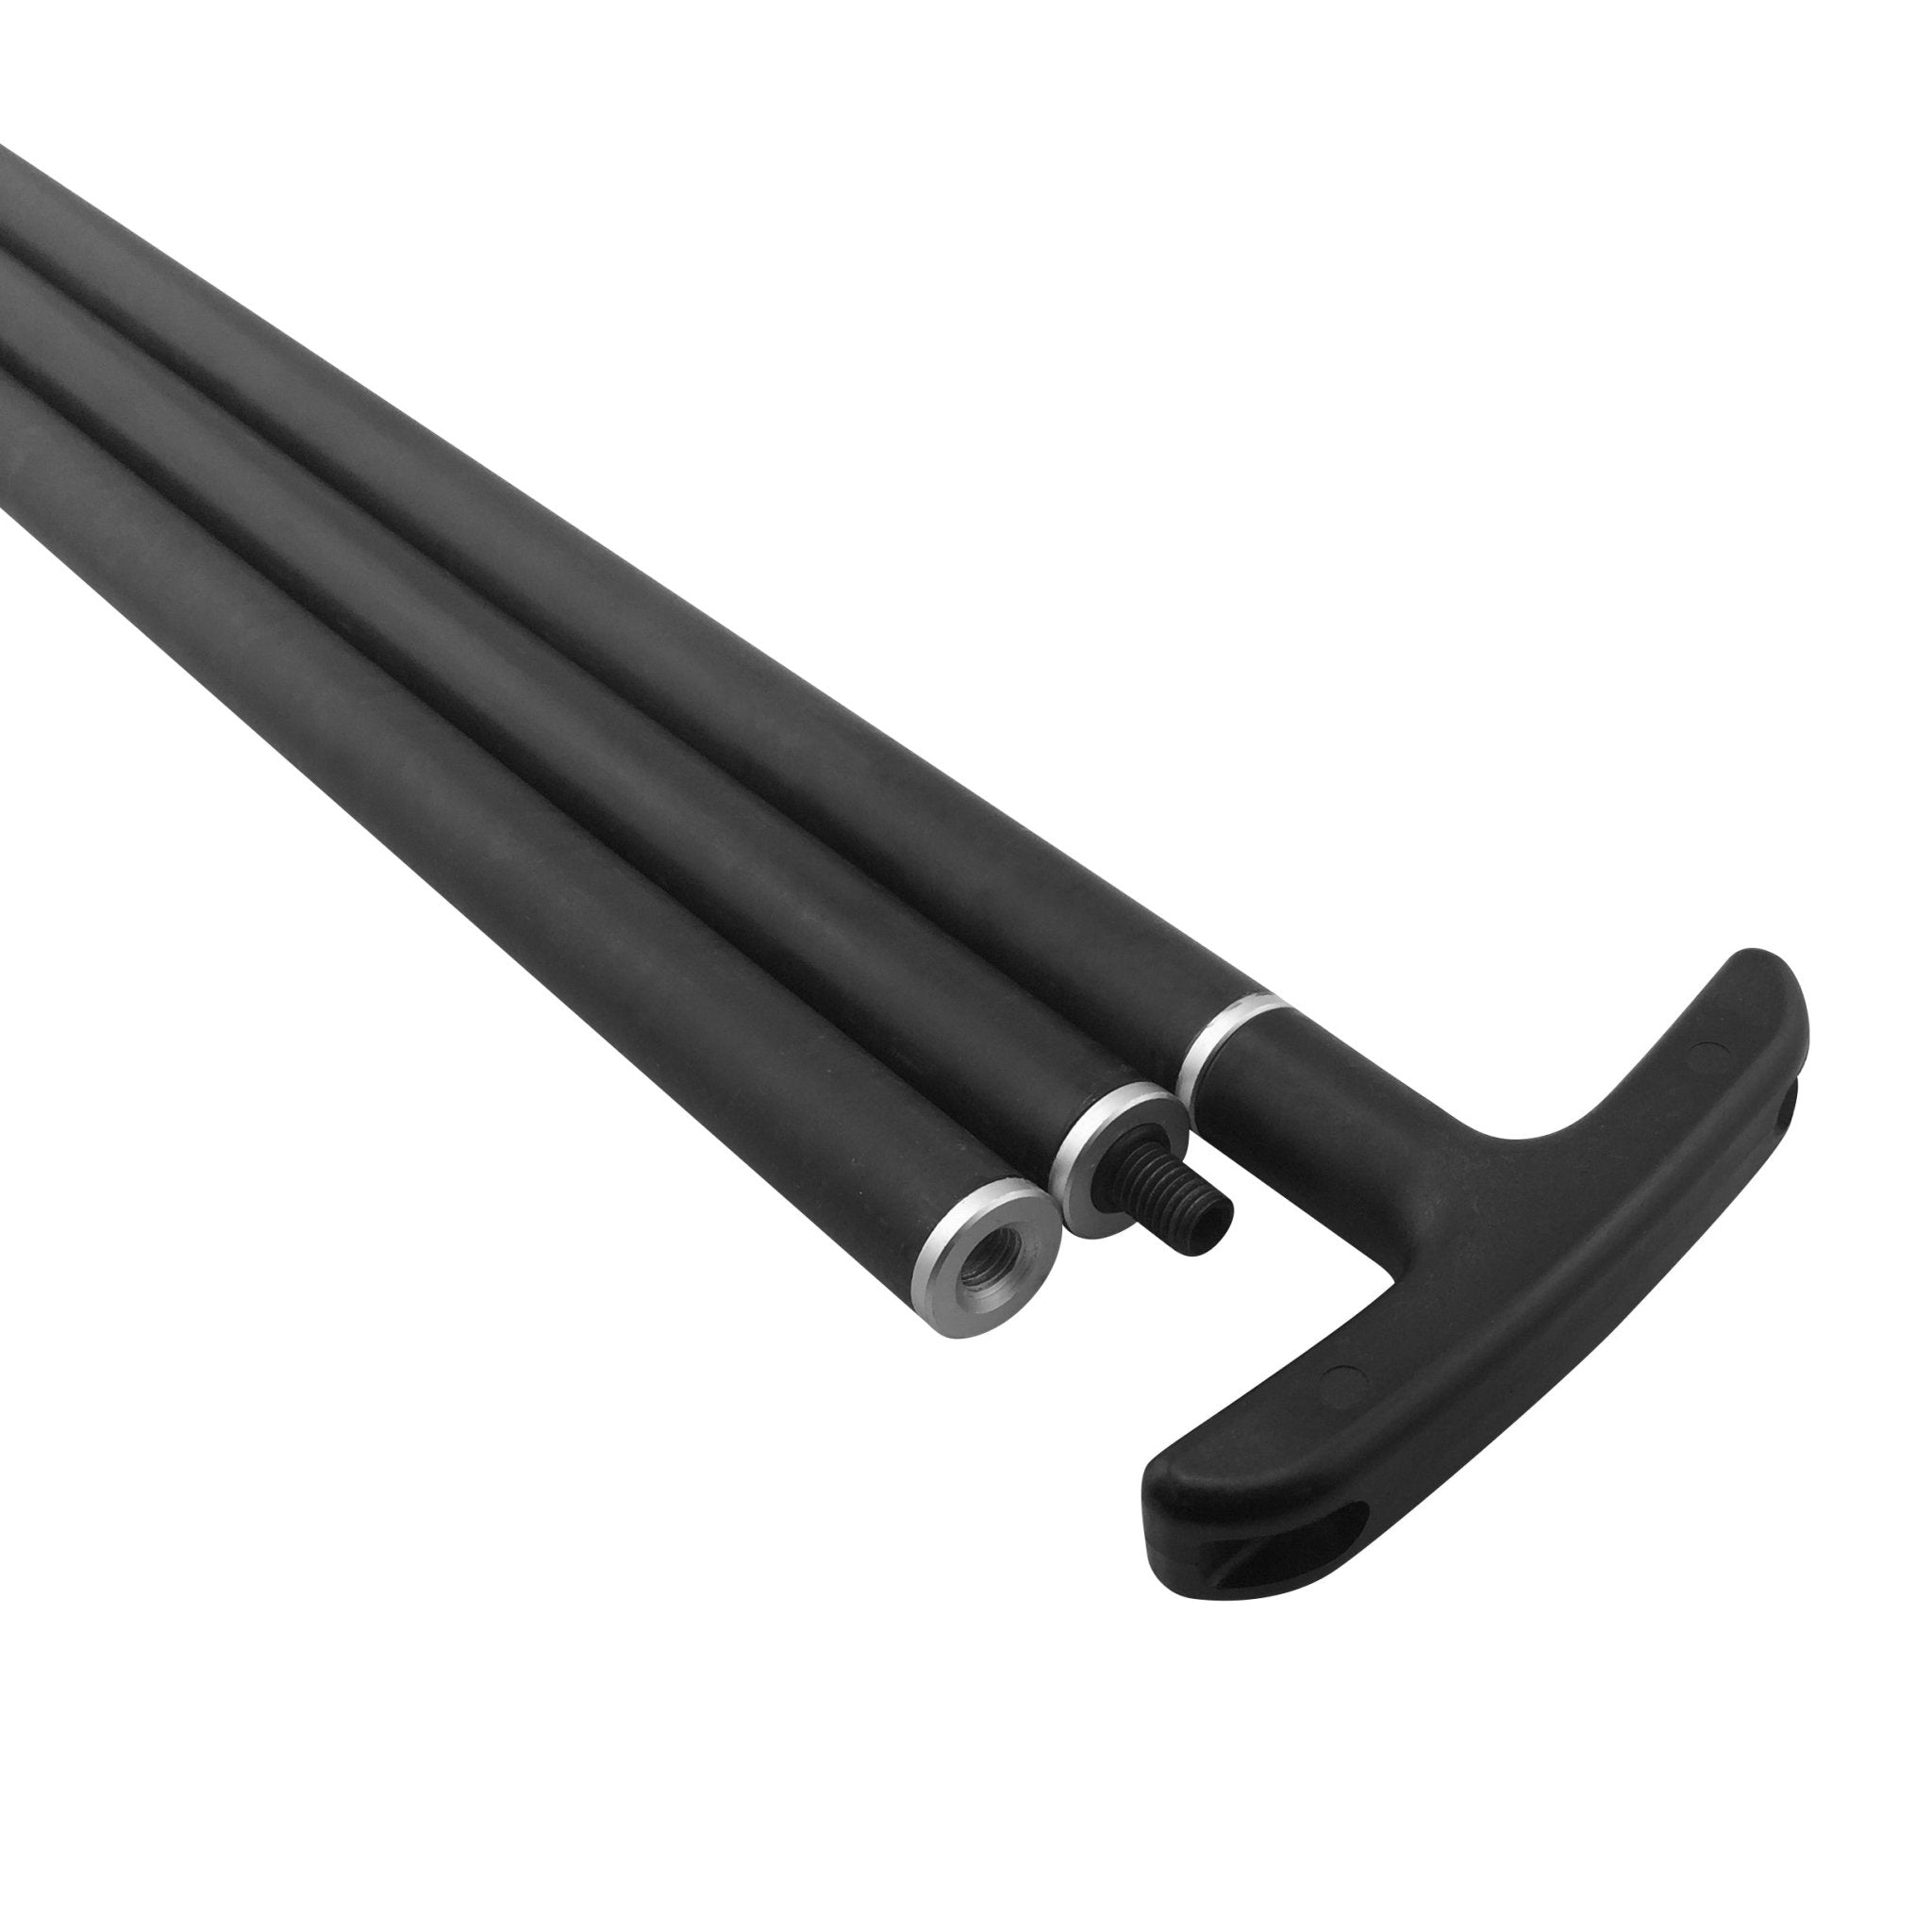 Anchor Pole - 7' Fiberglass 3 piece - Vibe Kayaks